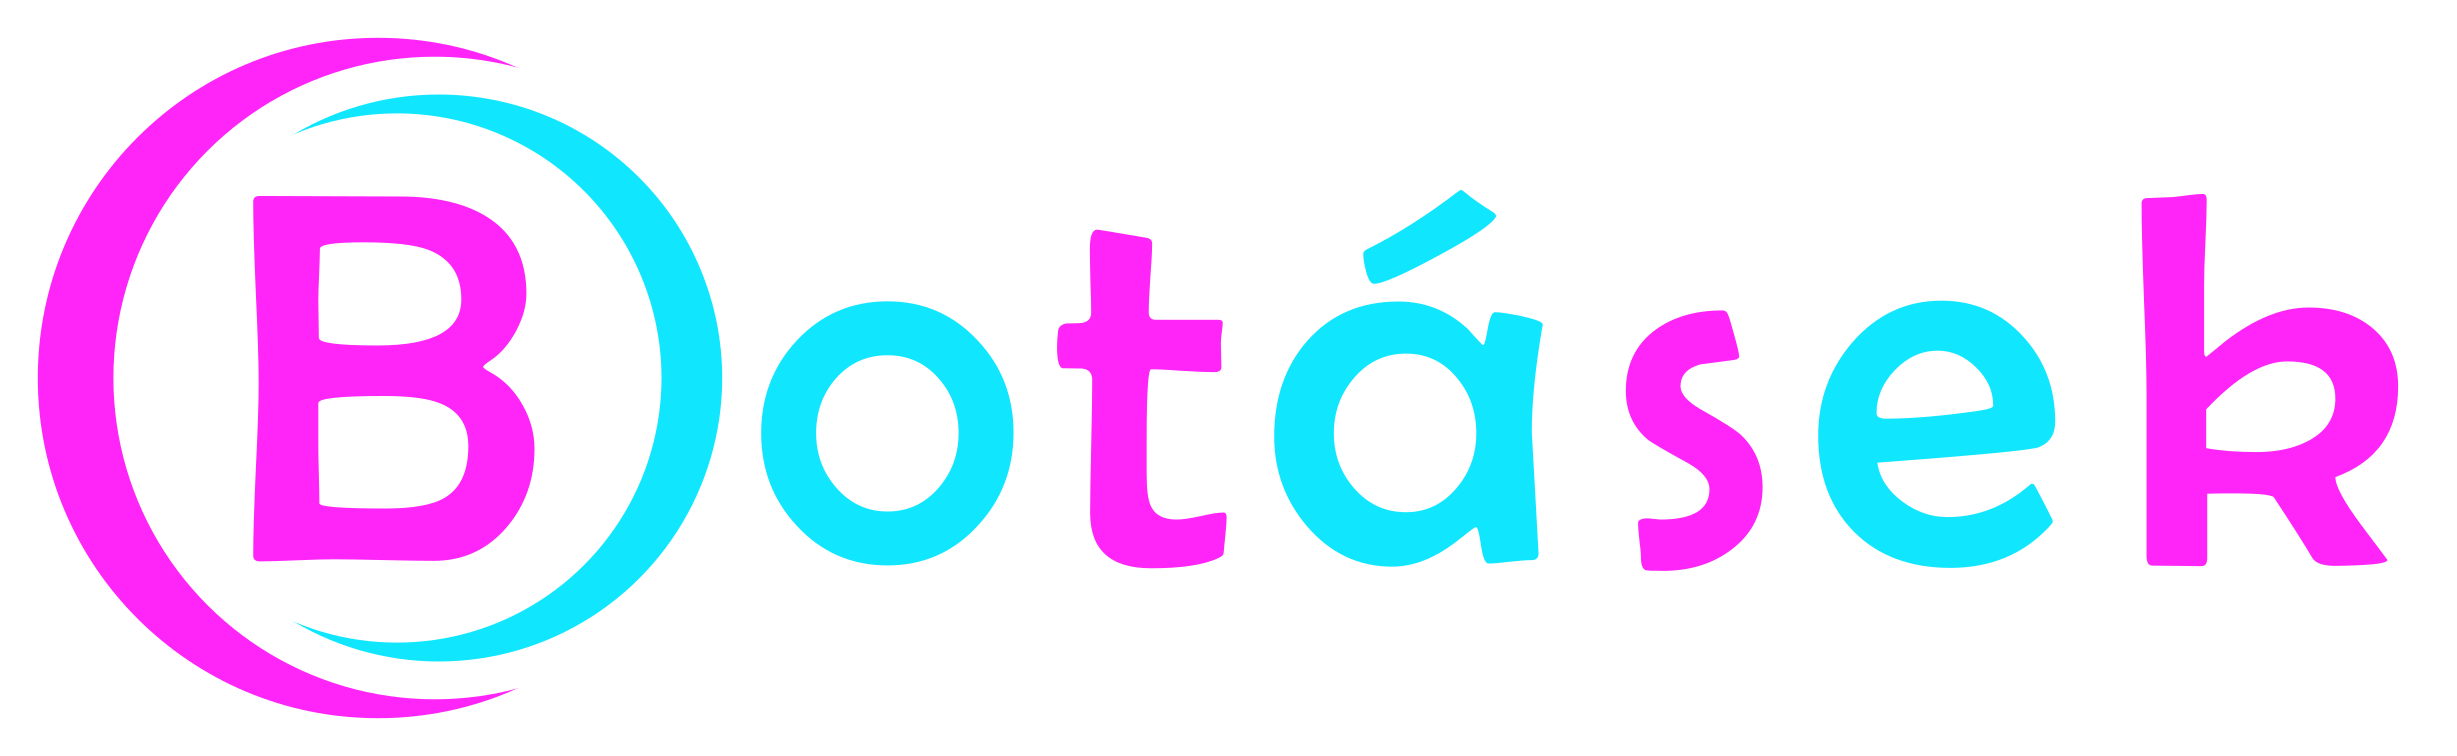 www.botasek.cz